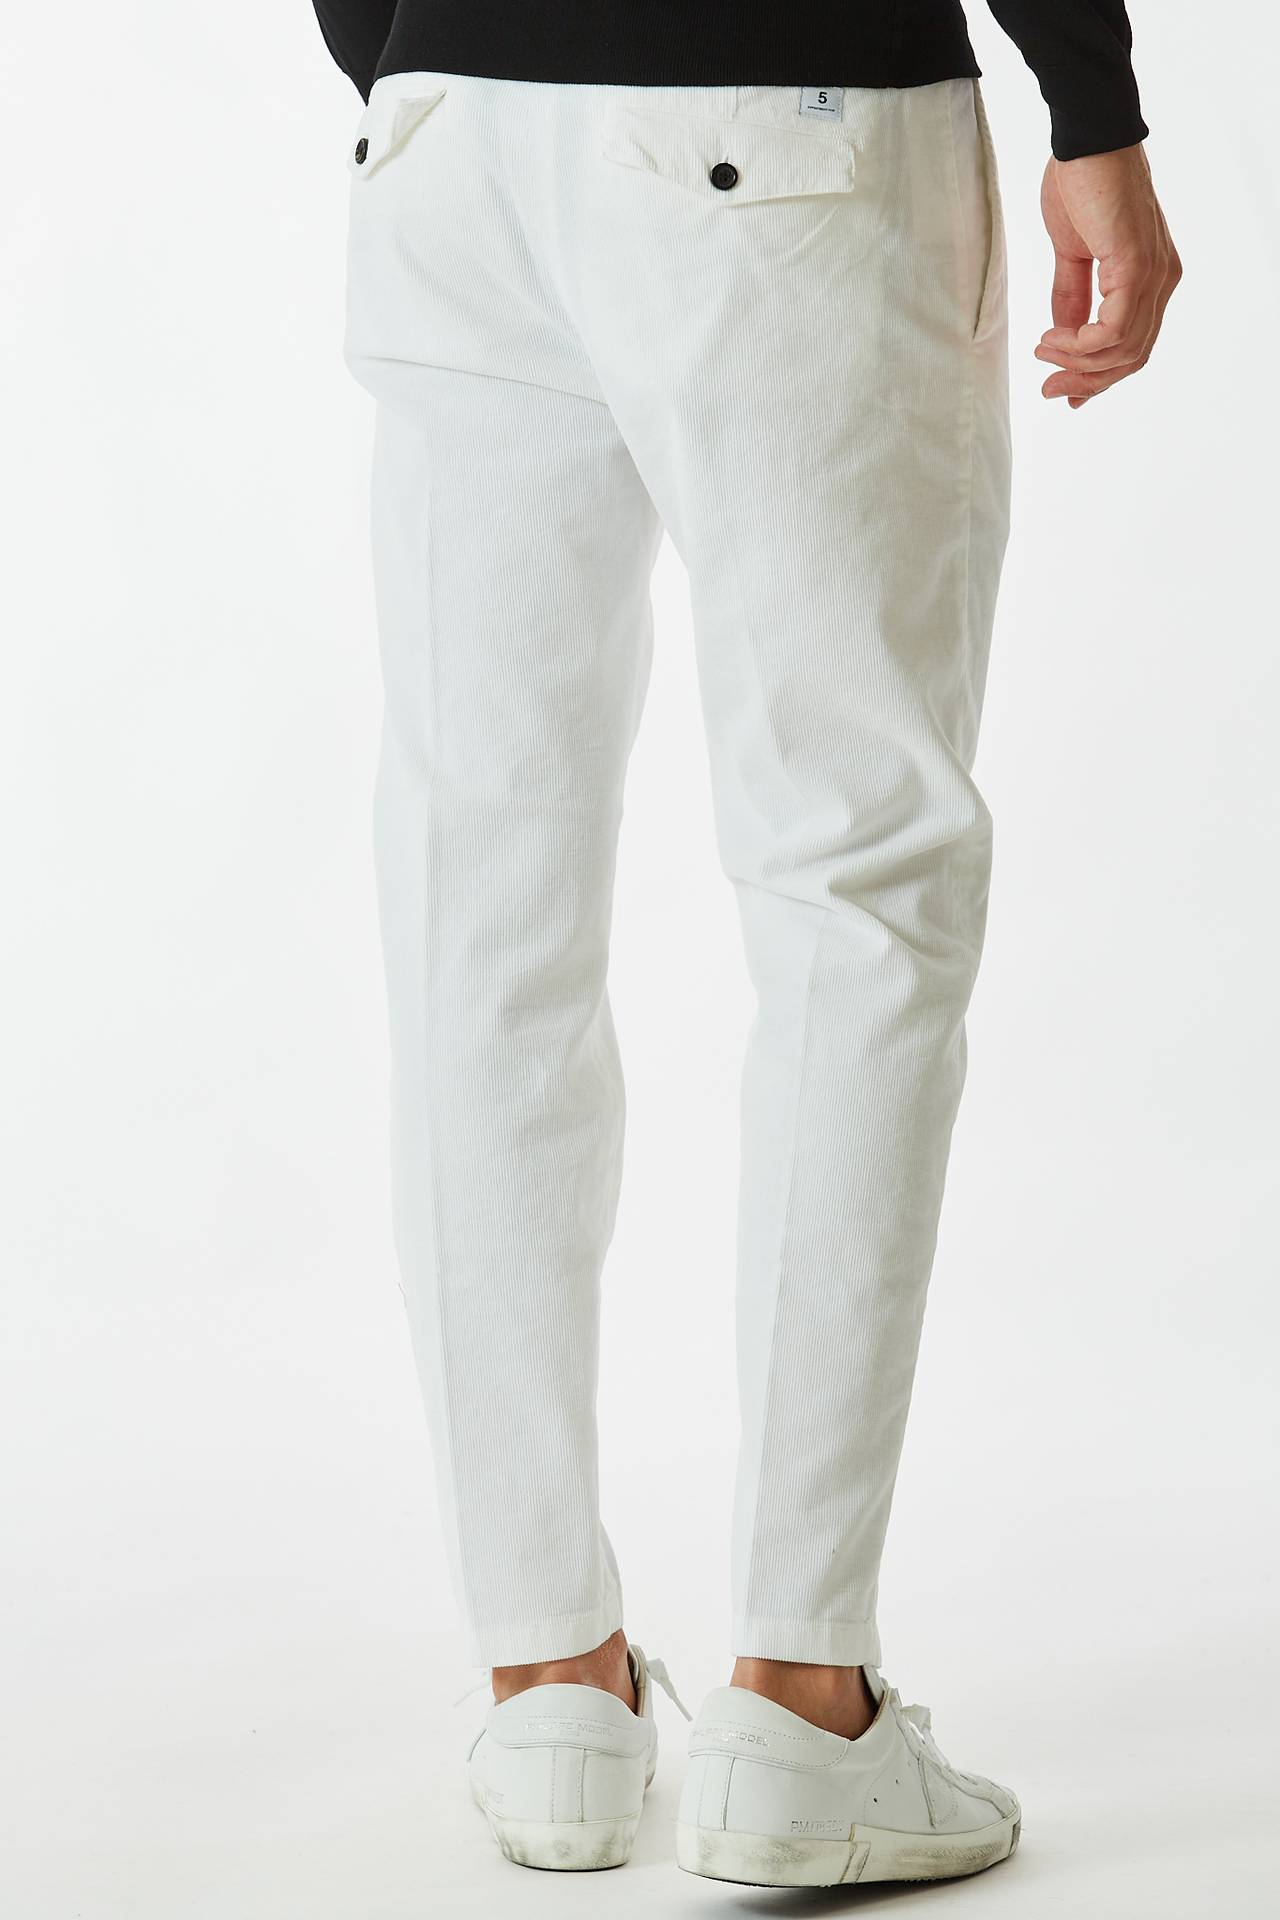 Pantalone PRINCE PENCES bianco